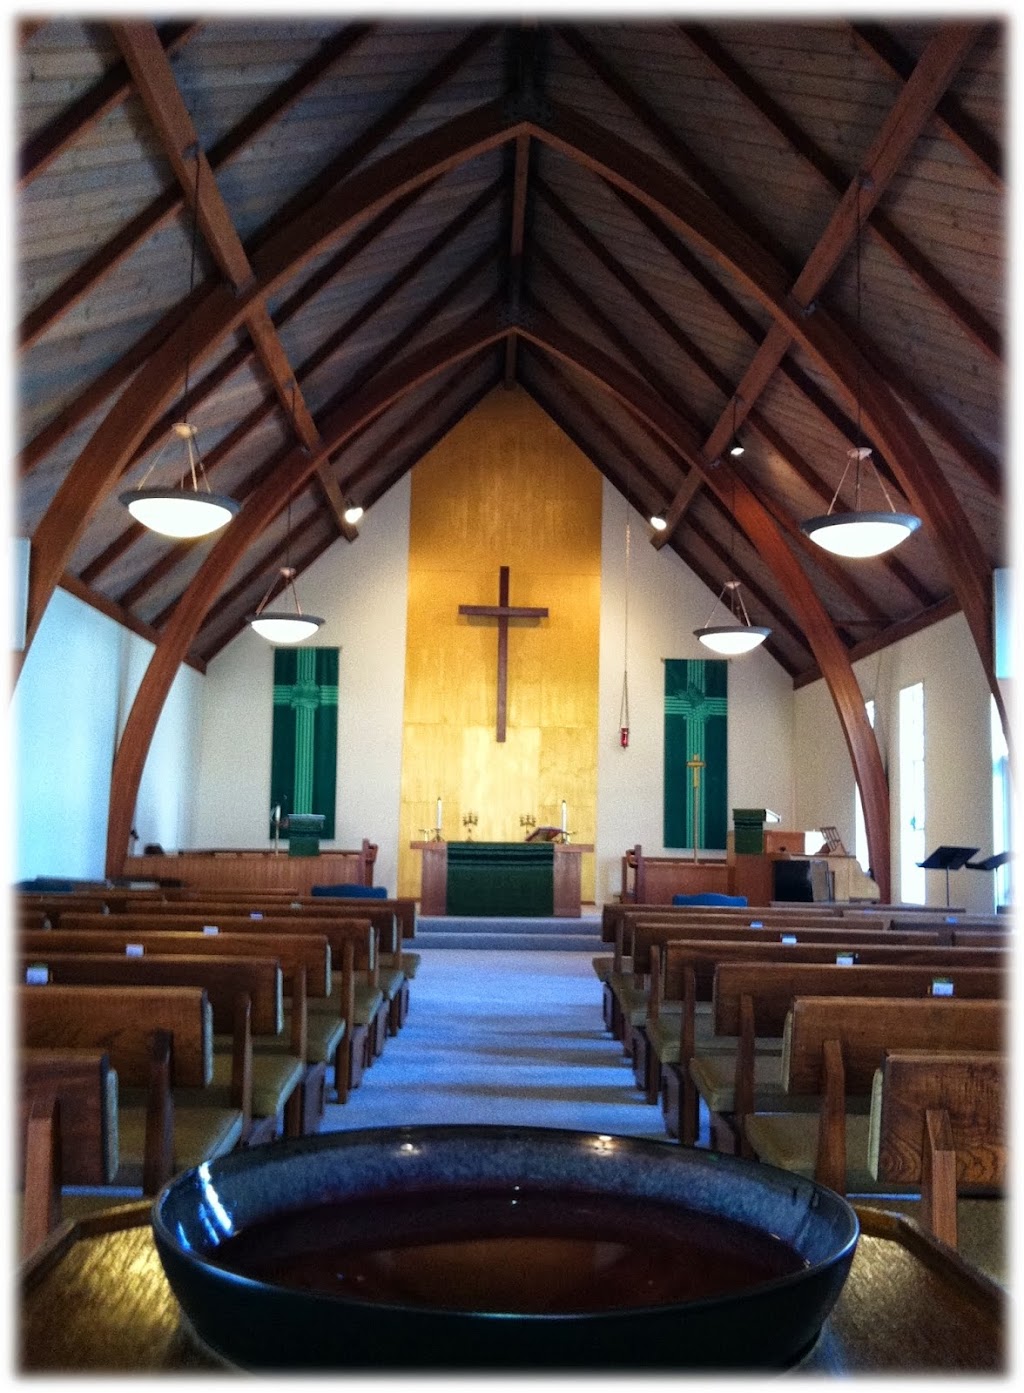 Unity Lutheran Church - ELCA | 609 Southwood Dr, South San Francisco, CA 94080 | Phone: (650) 583-5622